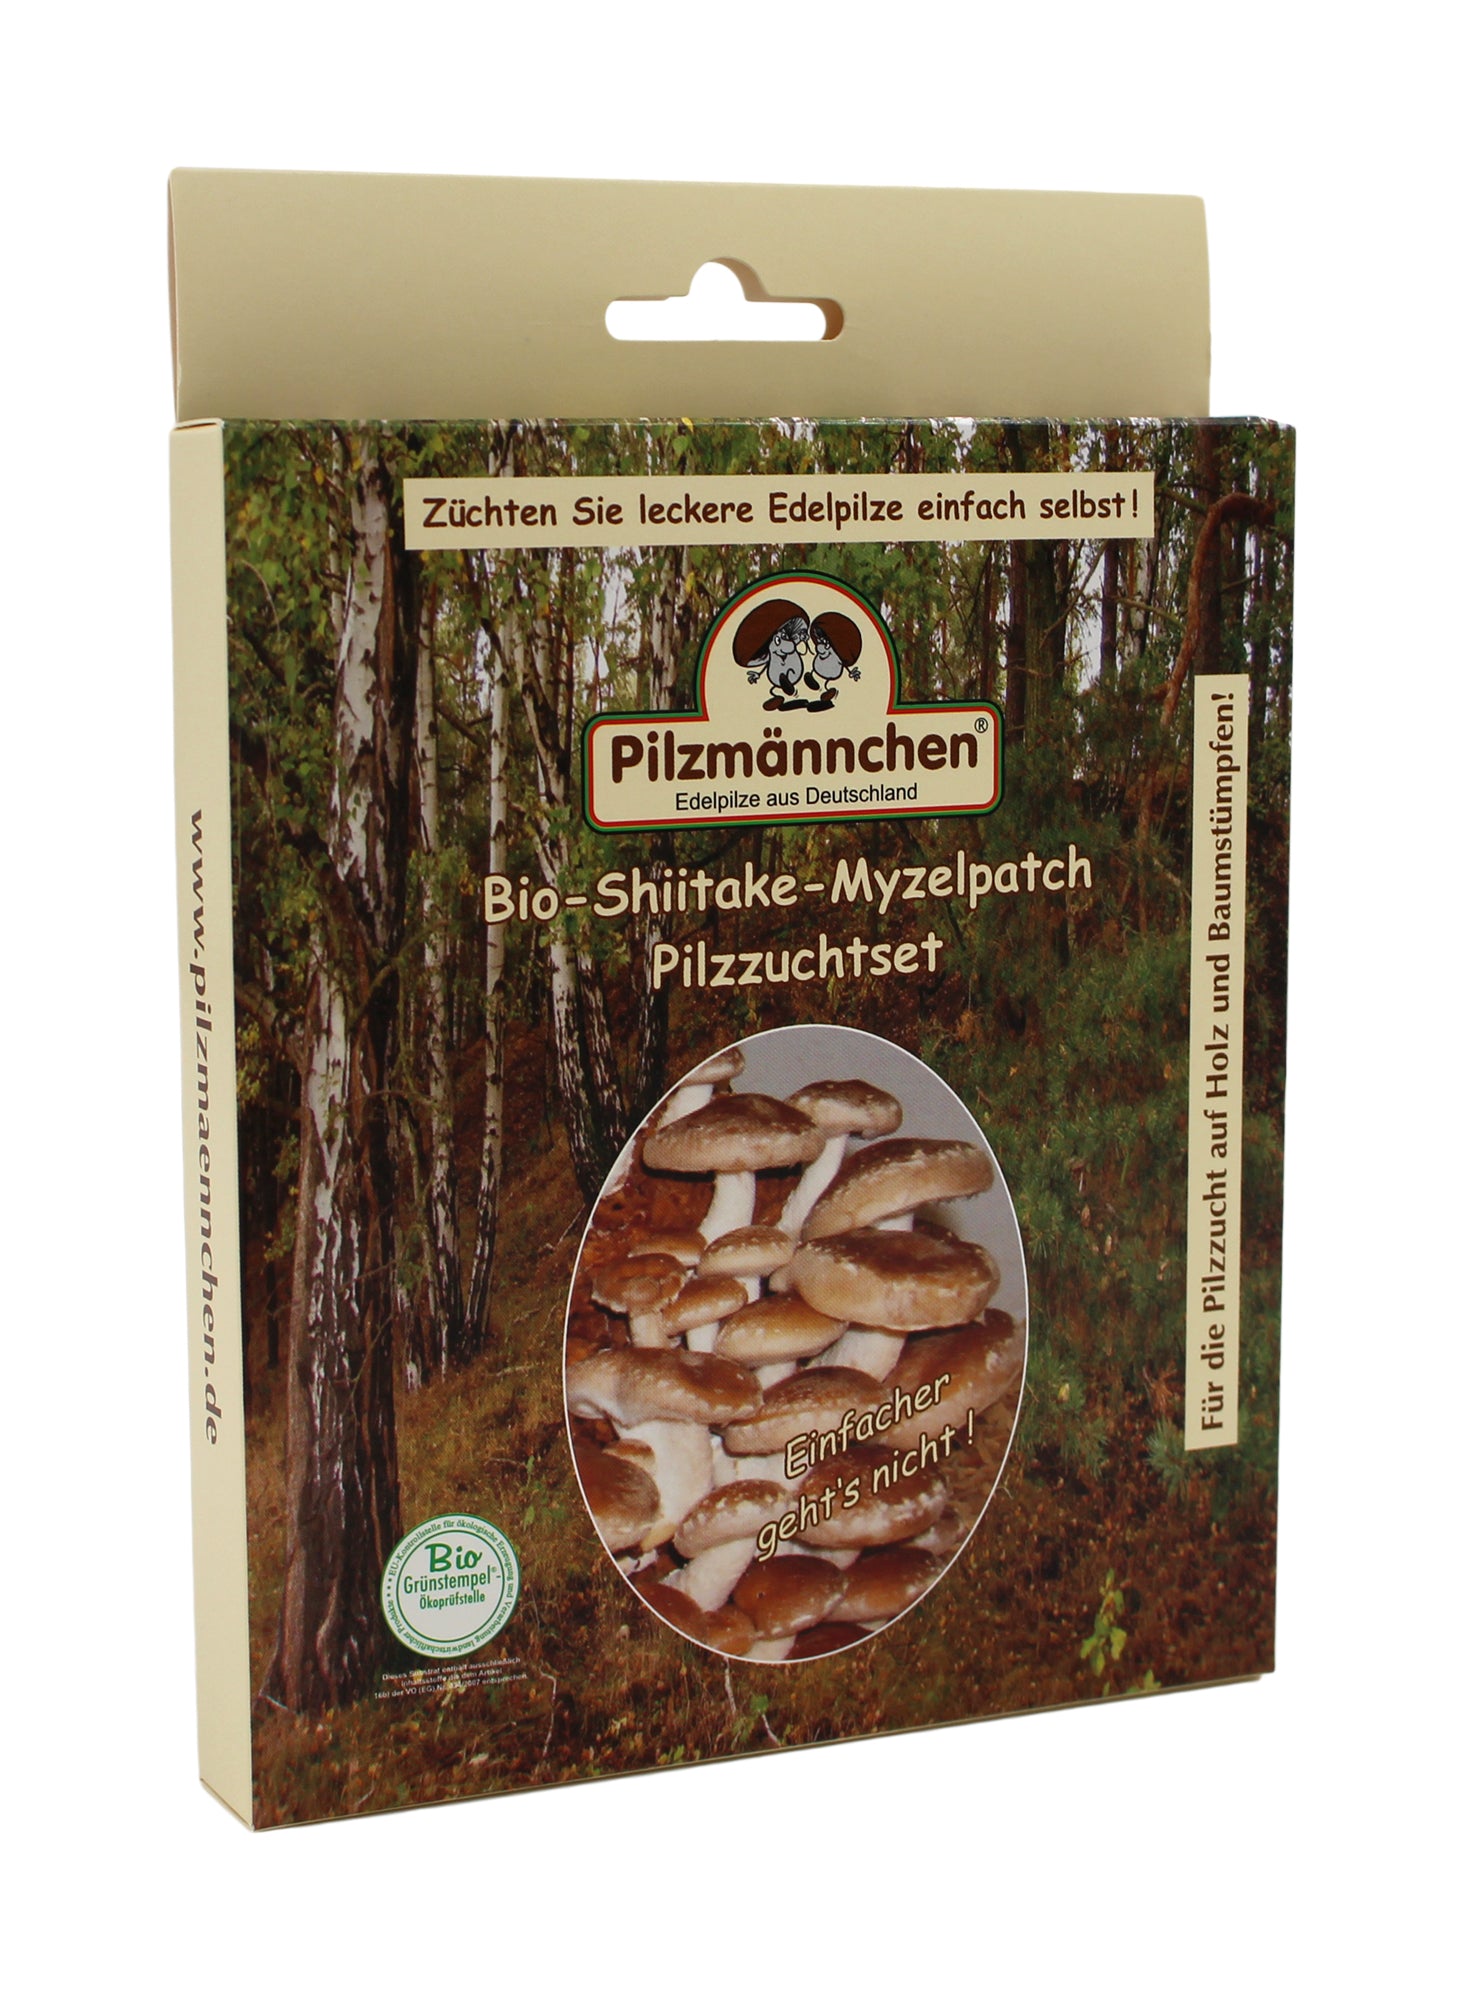 Myzelpatch-Pilzbrut